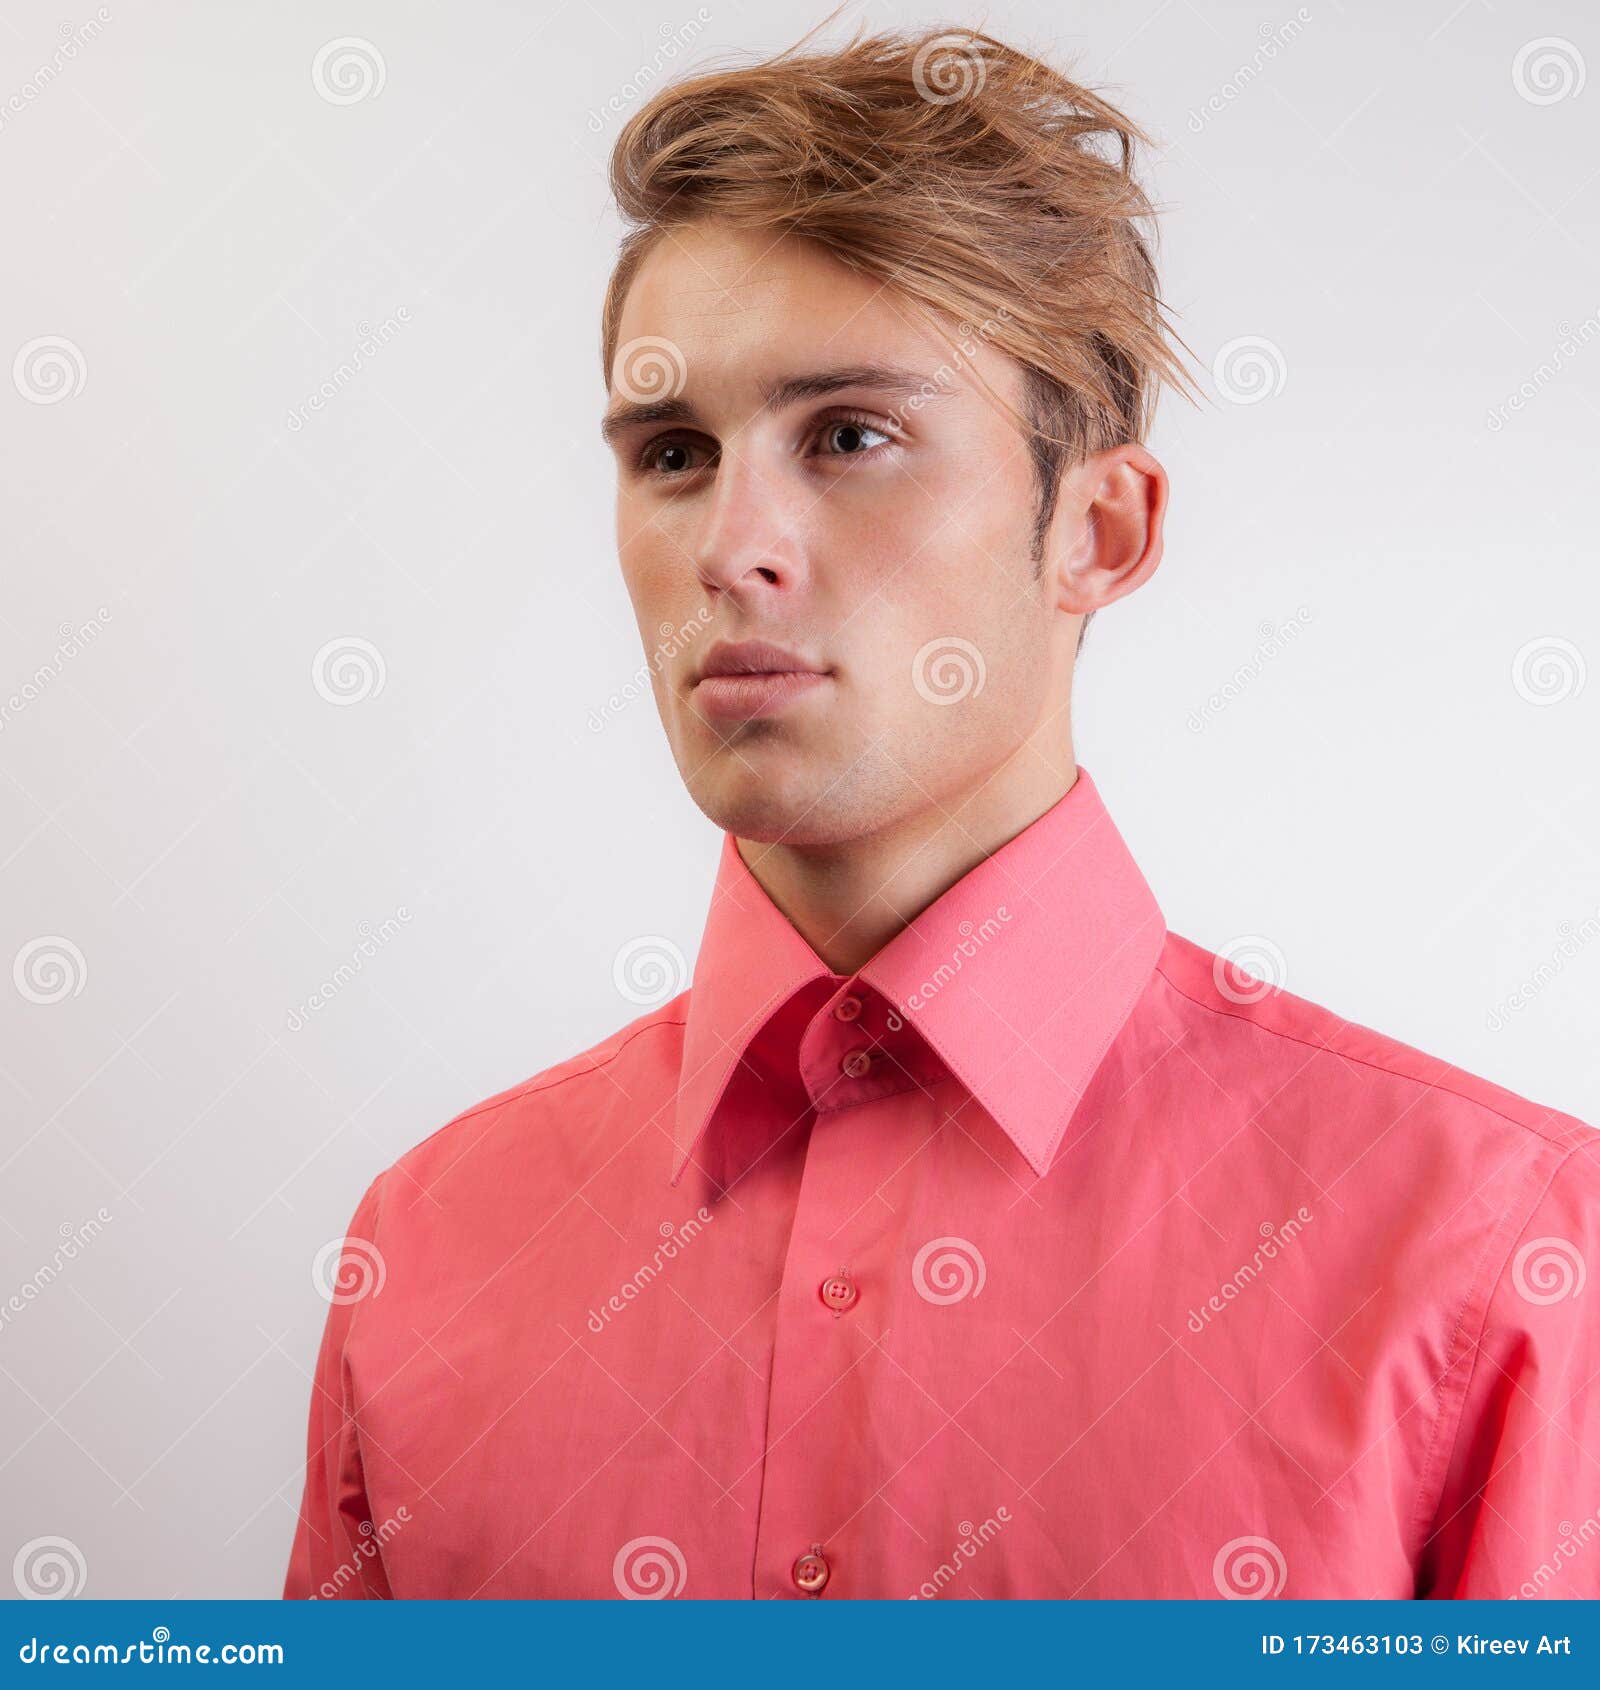 Handsome Young Elegant Man Studio Portrait Close-up. Stock Image ...